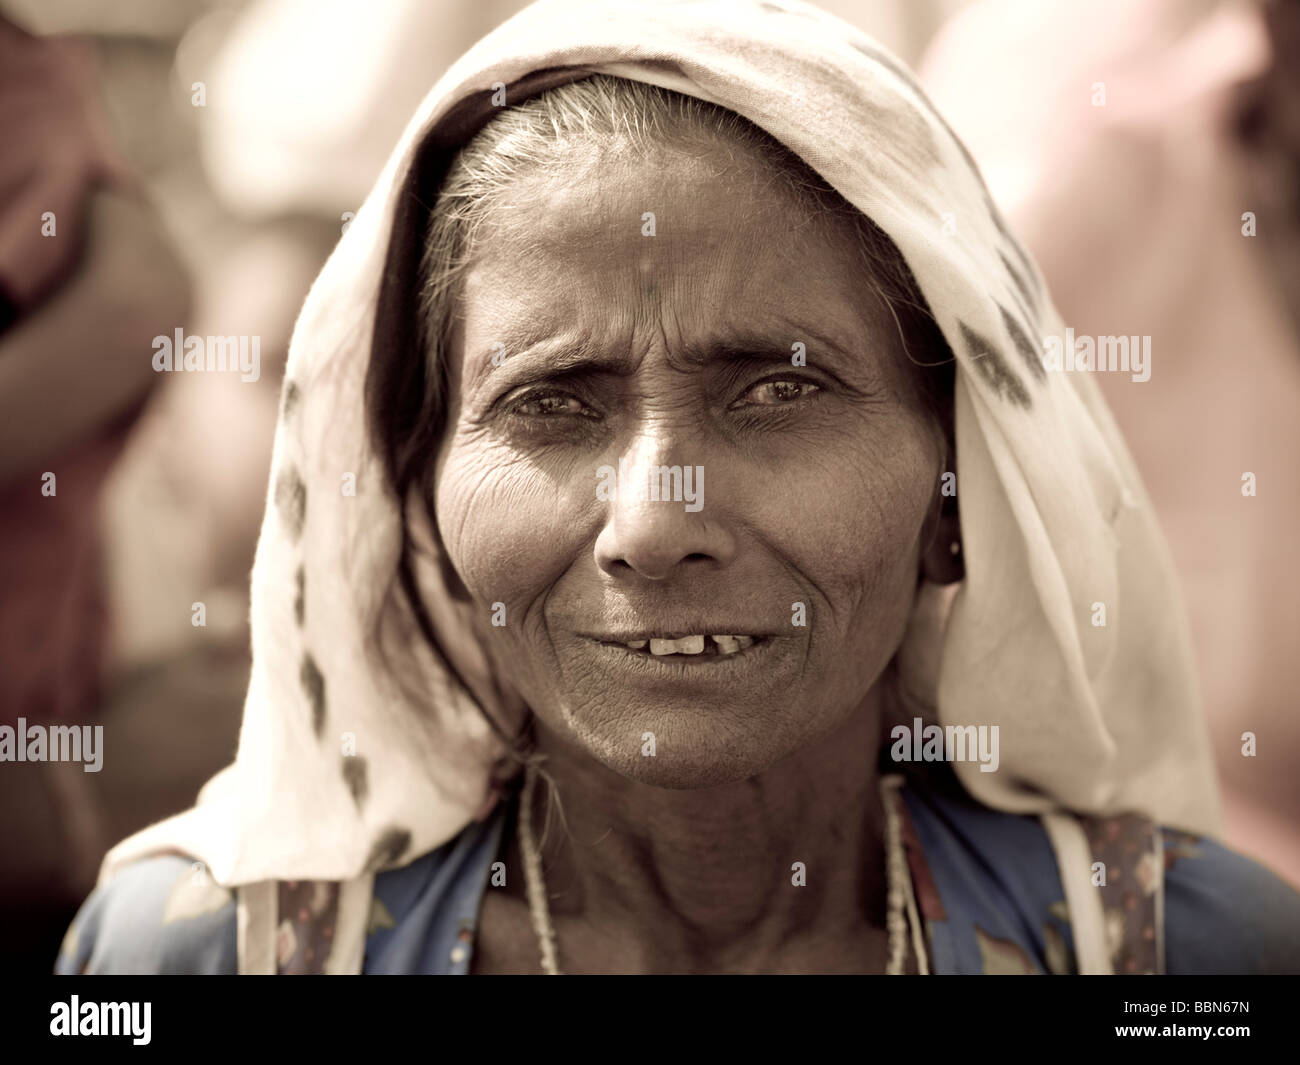 Gypsy woman smiling at the camera Stock Photo